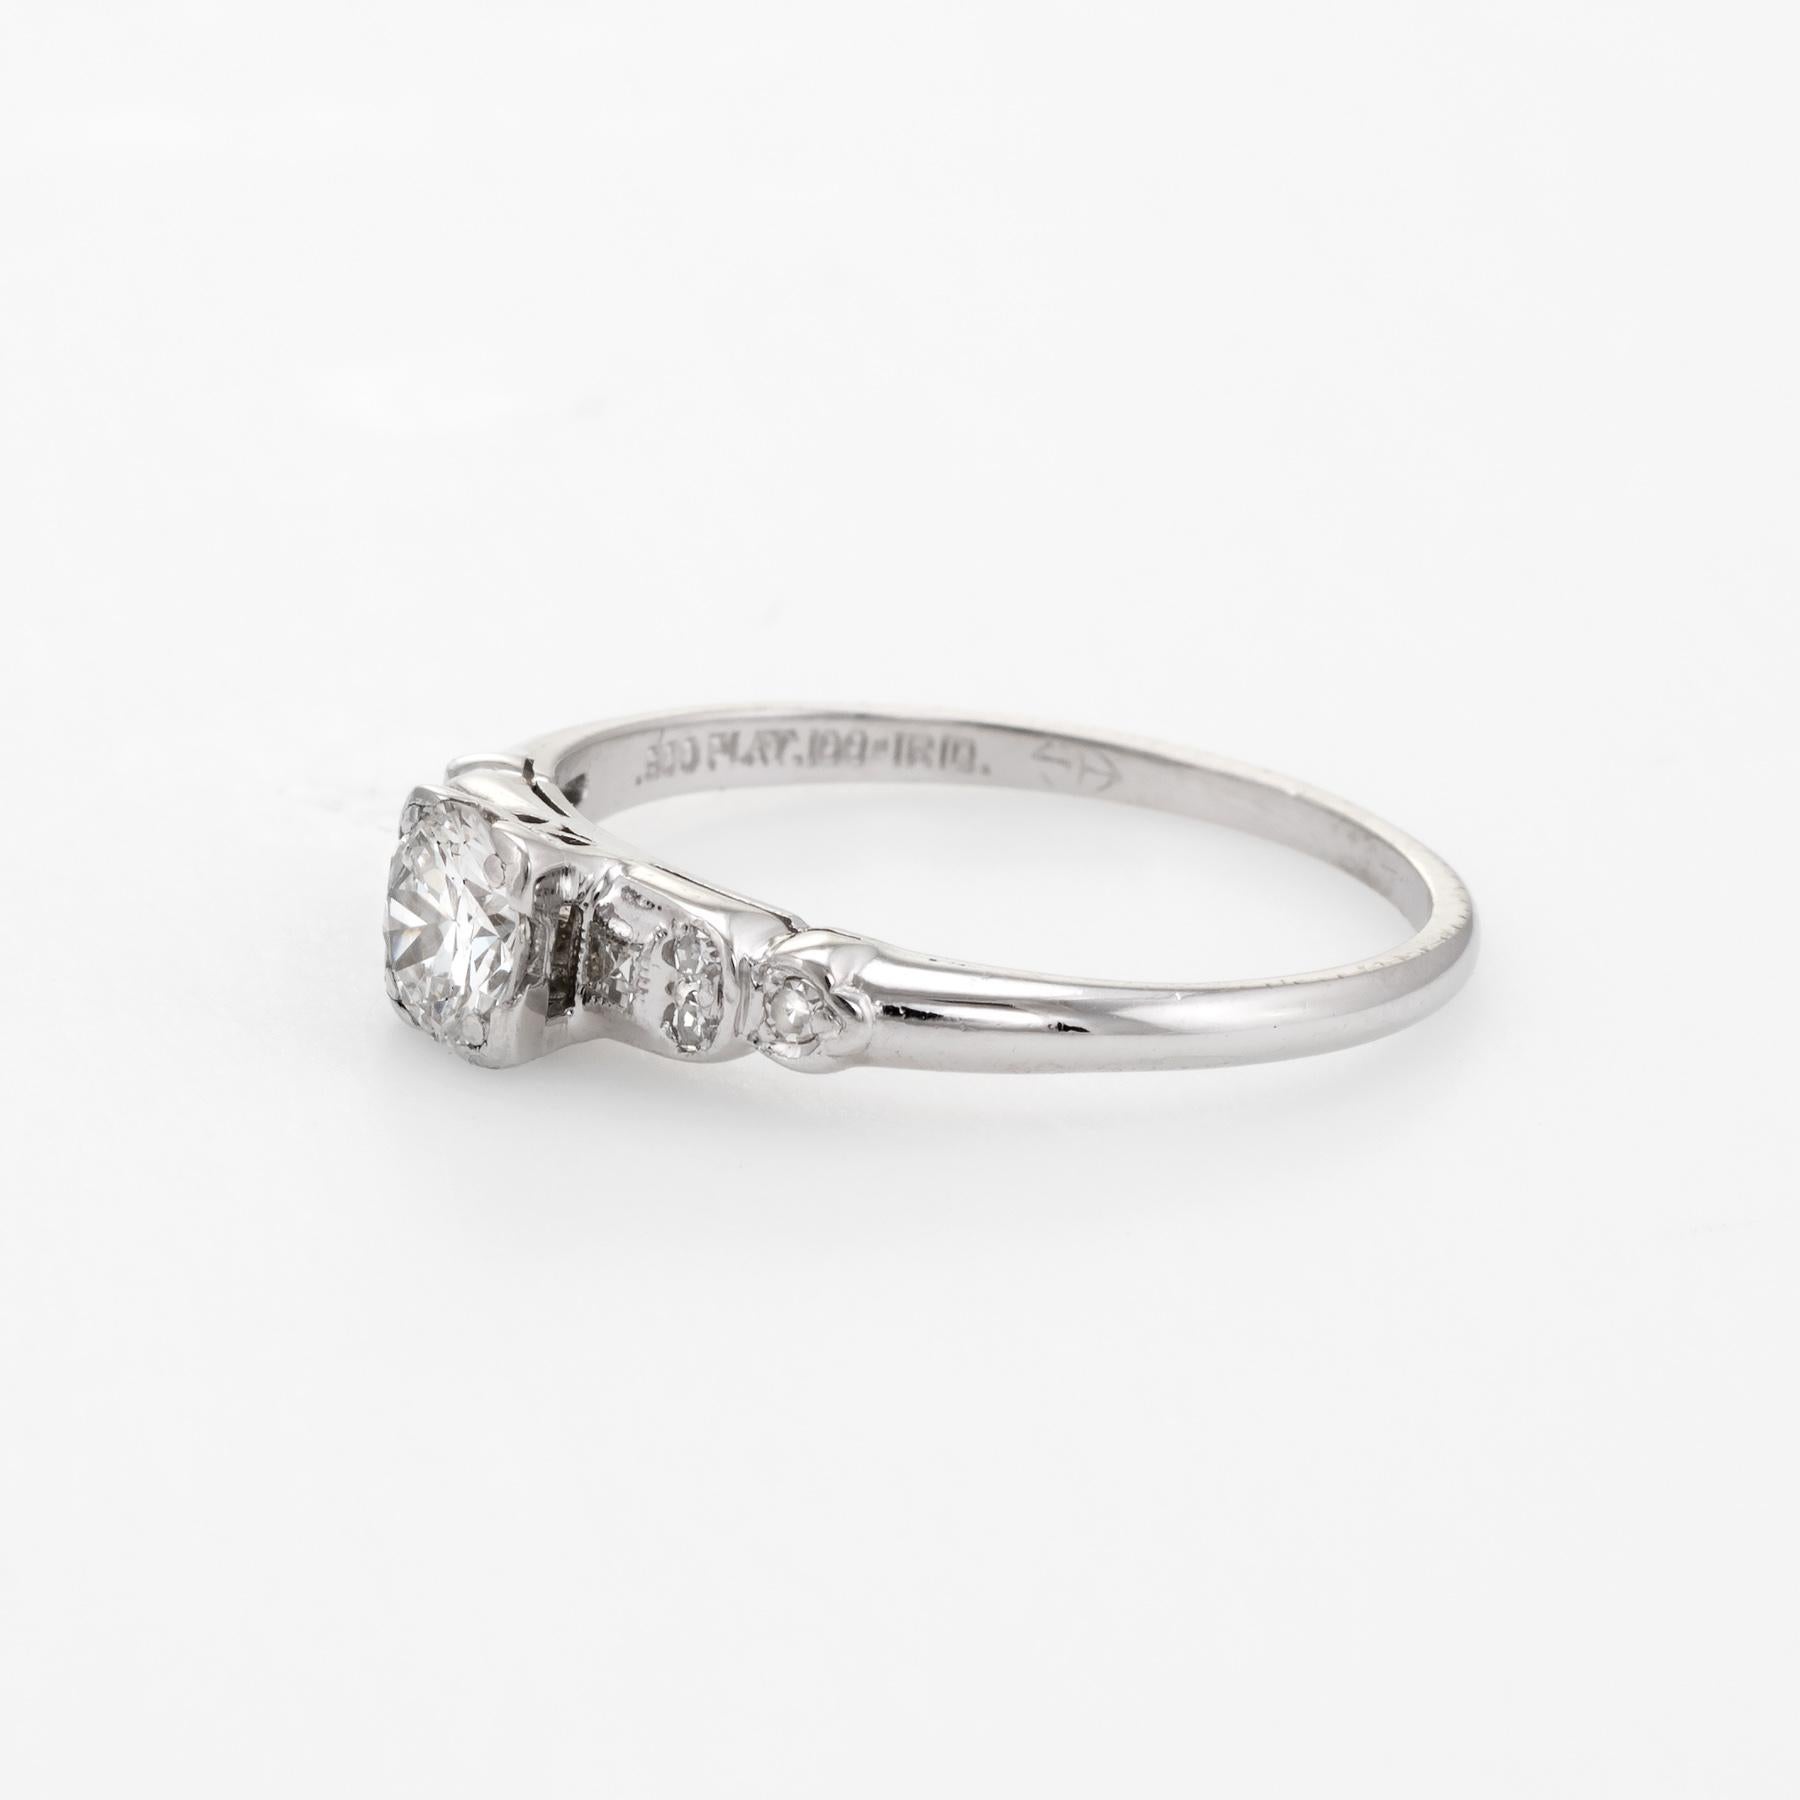 Old European Cut Antique Deco Diamond Engagement Ring Vintage Platinum Estate Fine Jewelry